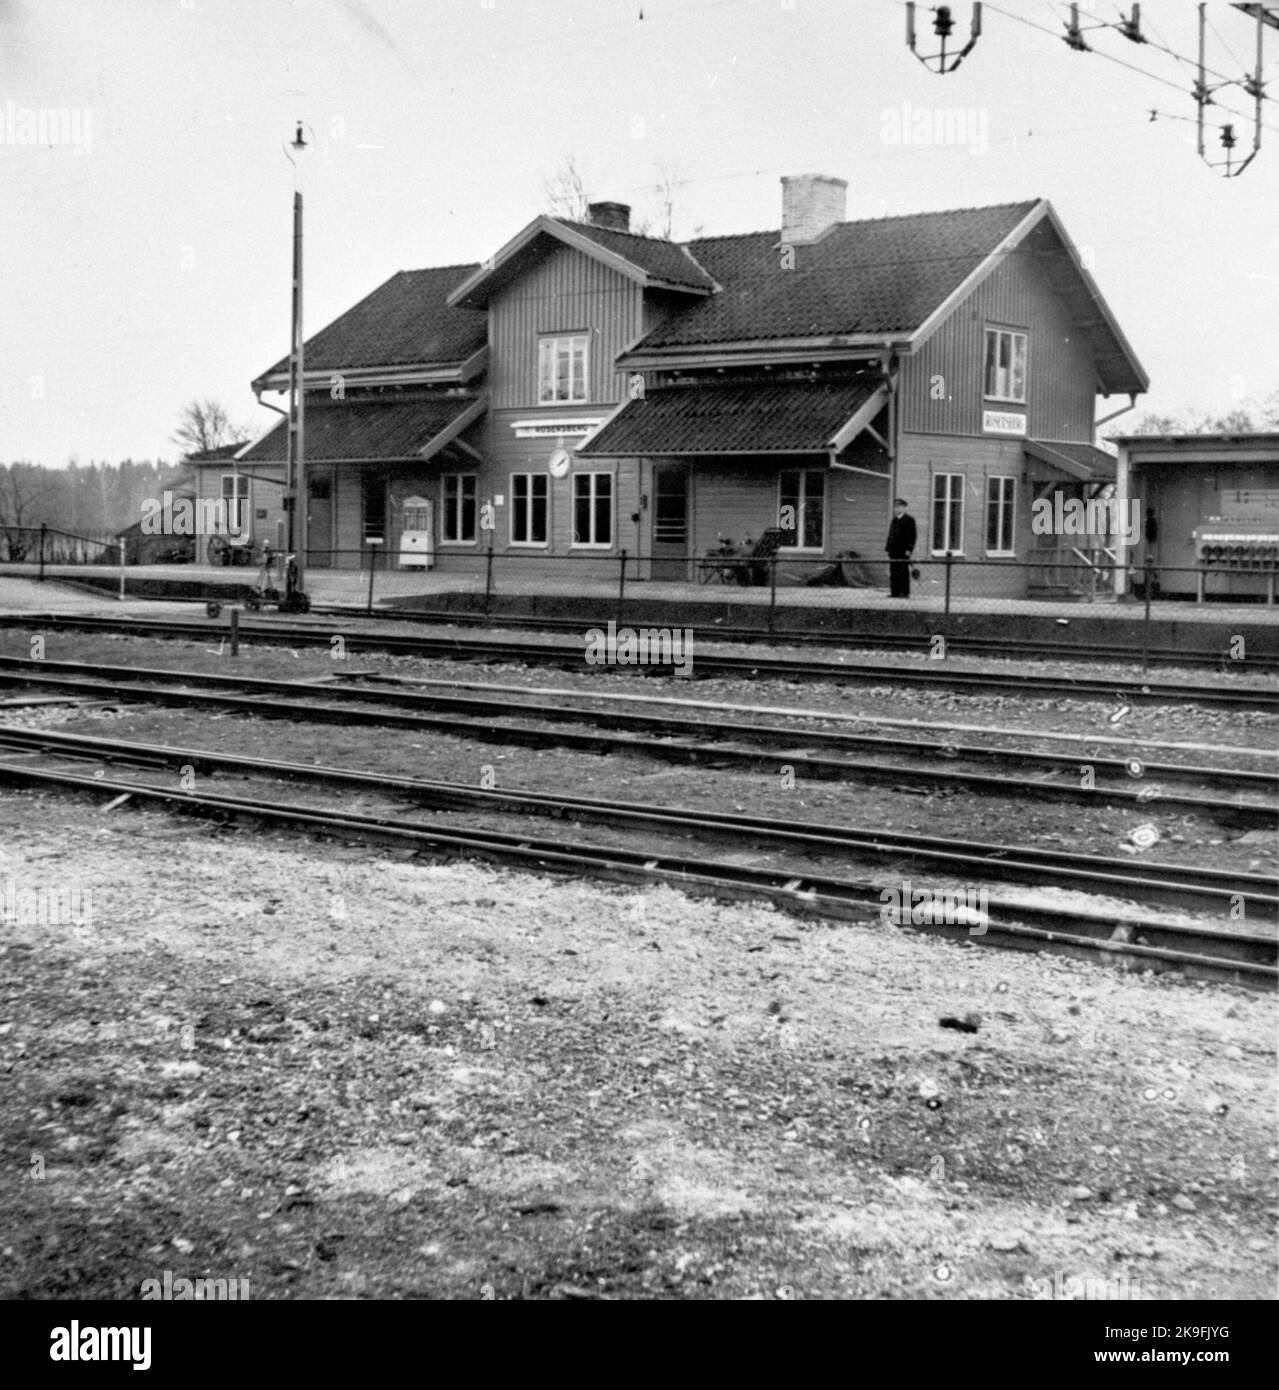 Rosersberg station. Stock Photo